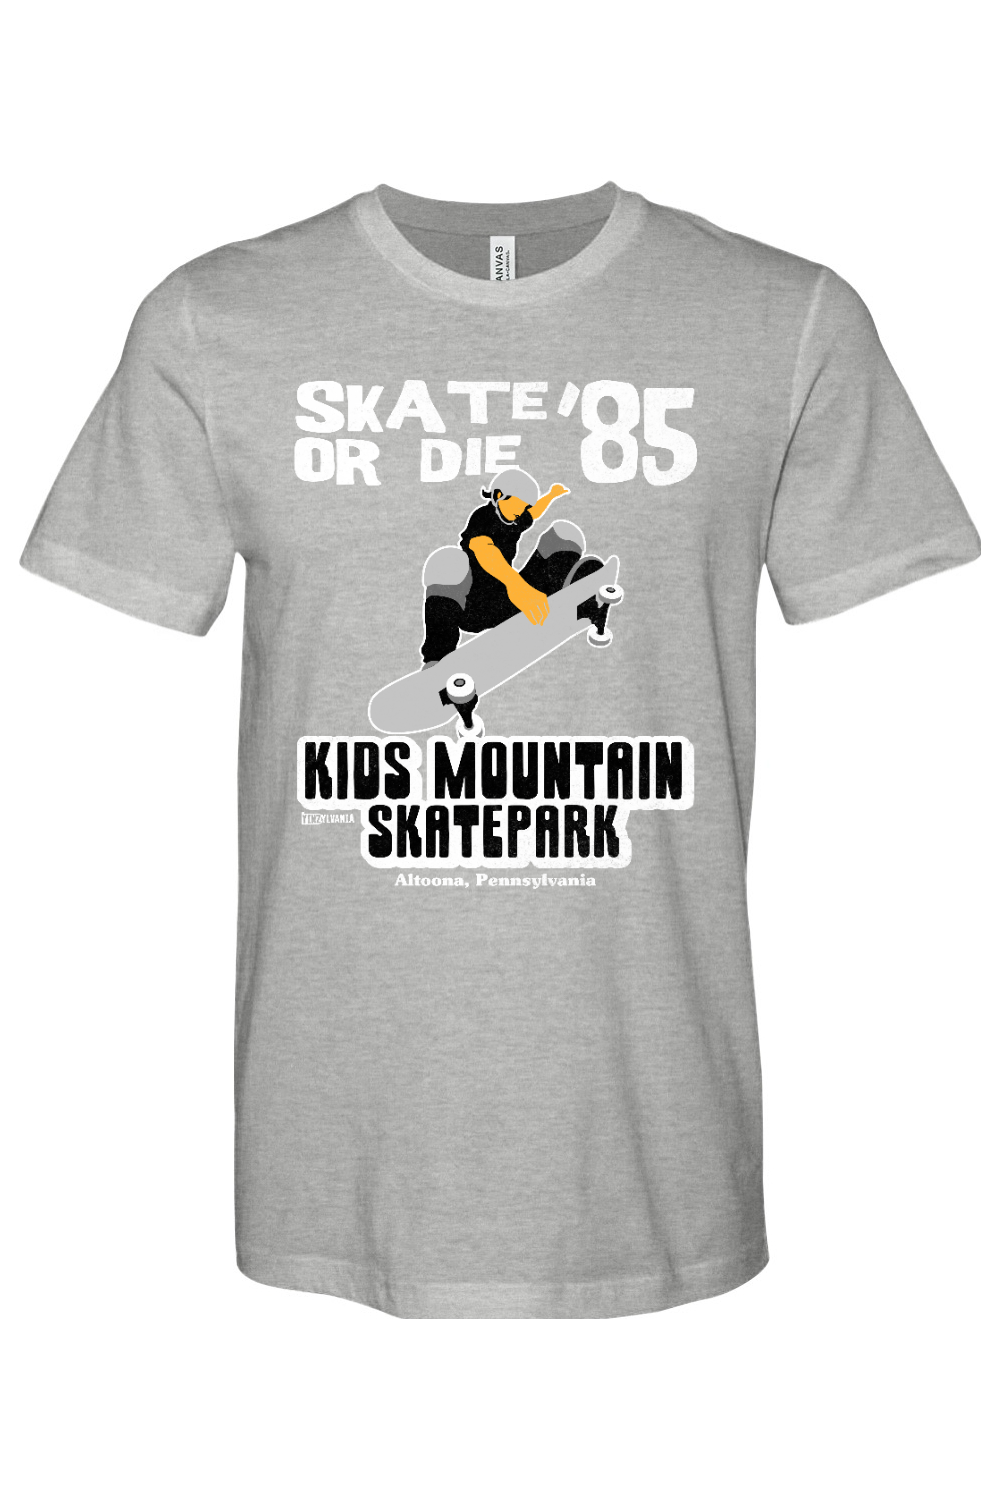 Kids Mountain Skate Park - Altoona, PA - Yinzylvania